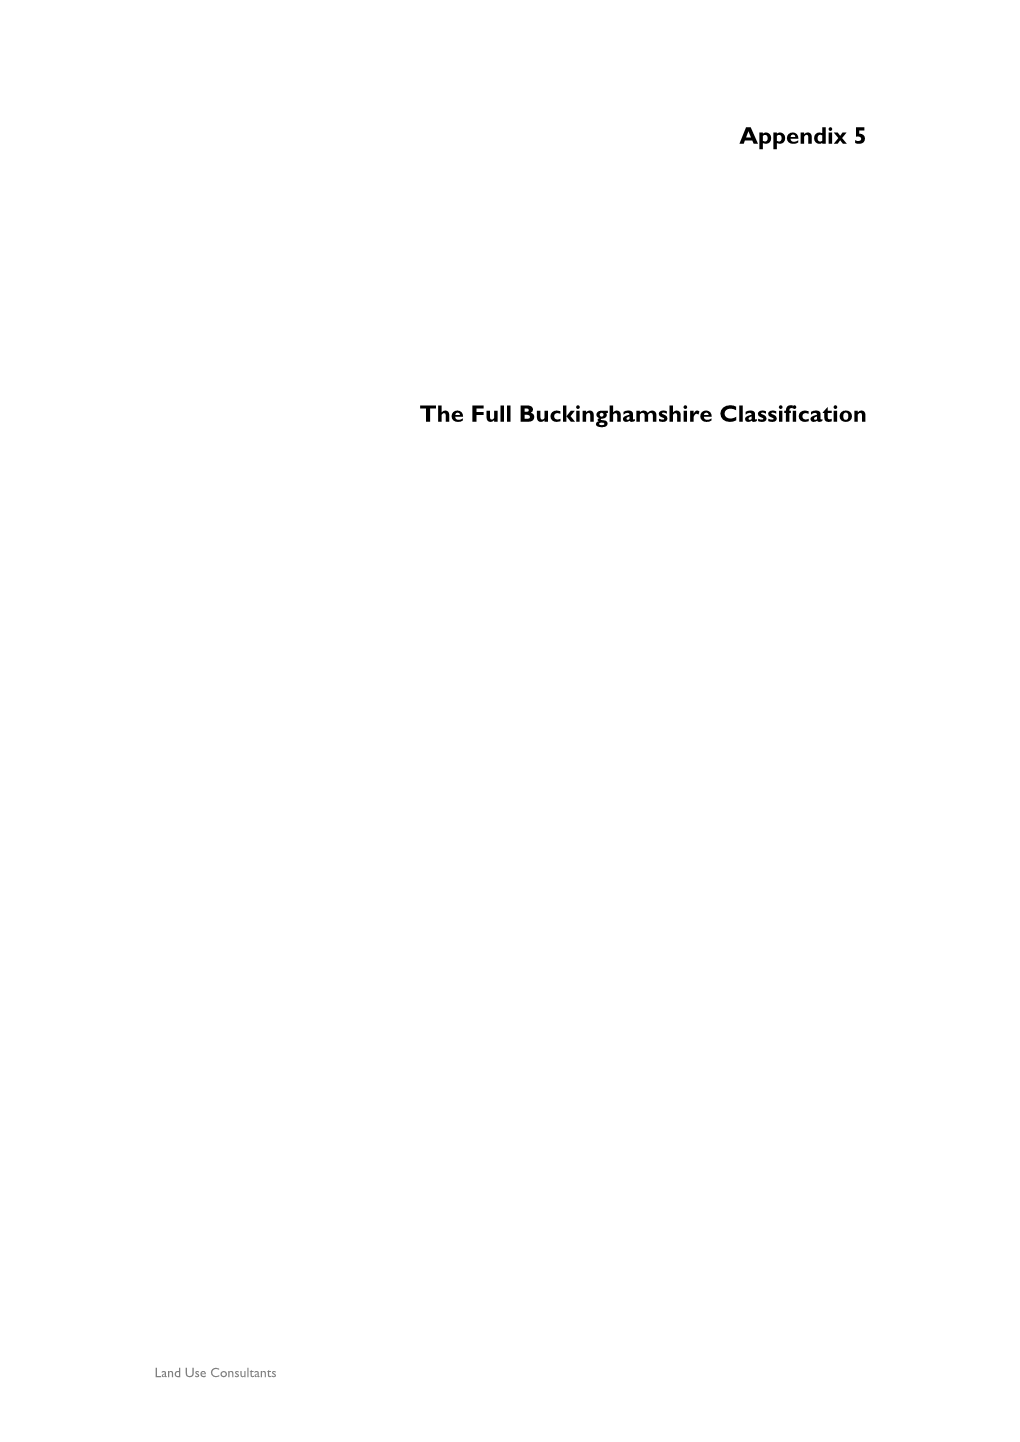 Appendix 5 the Full Buckinghamshire Classification